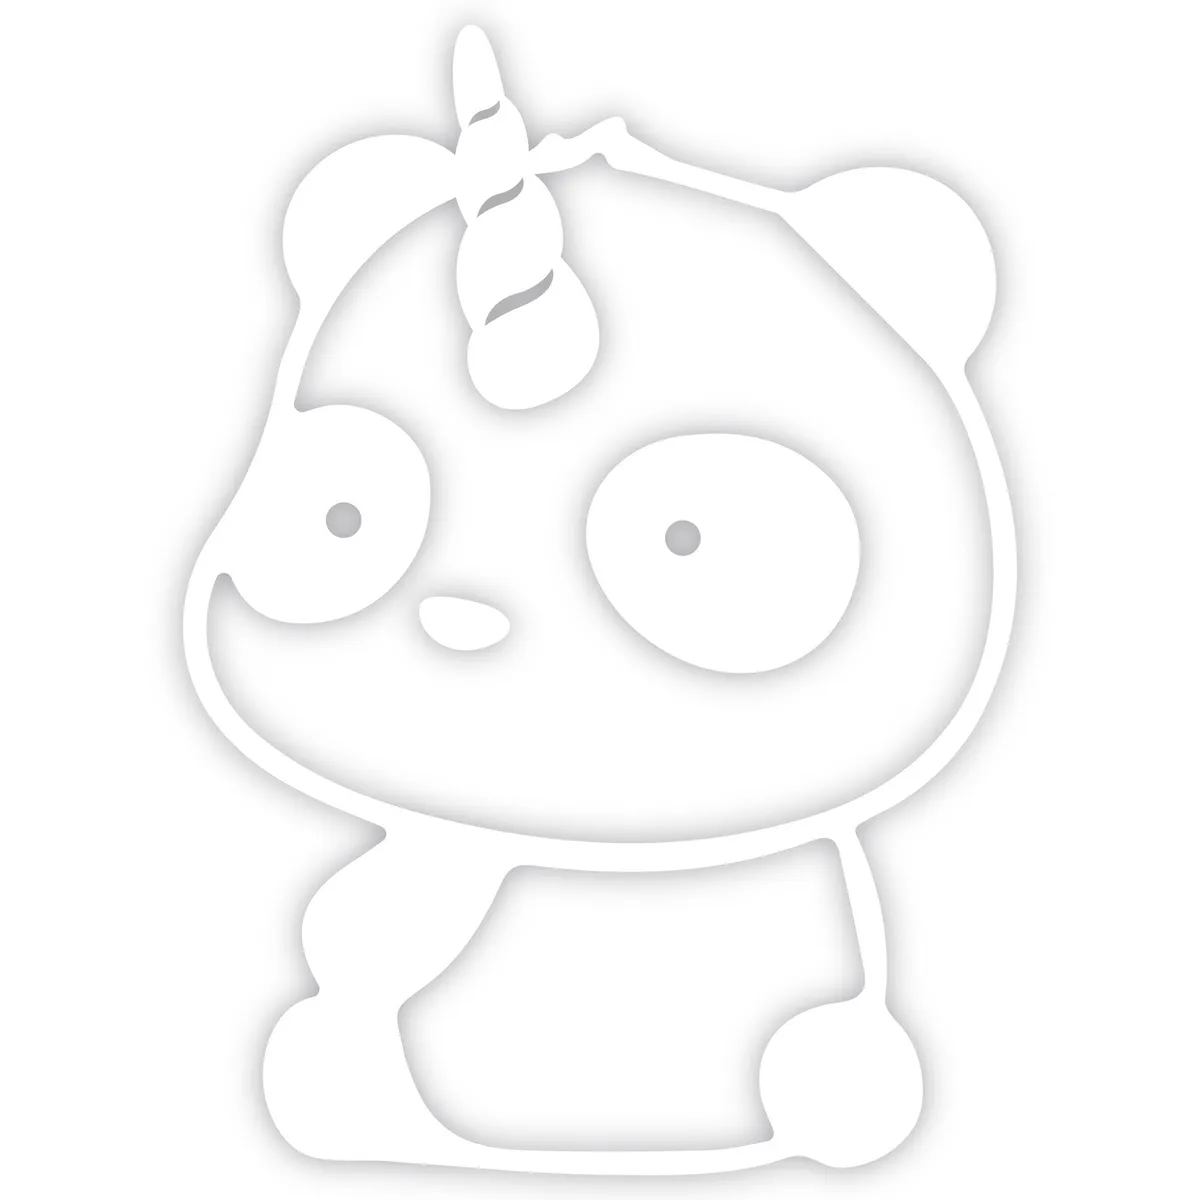 Pandacorn sitting vinyl del r window sticker unicorn panda funny cute